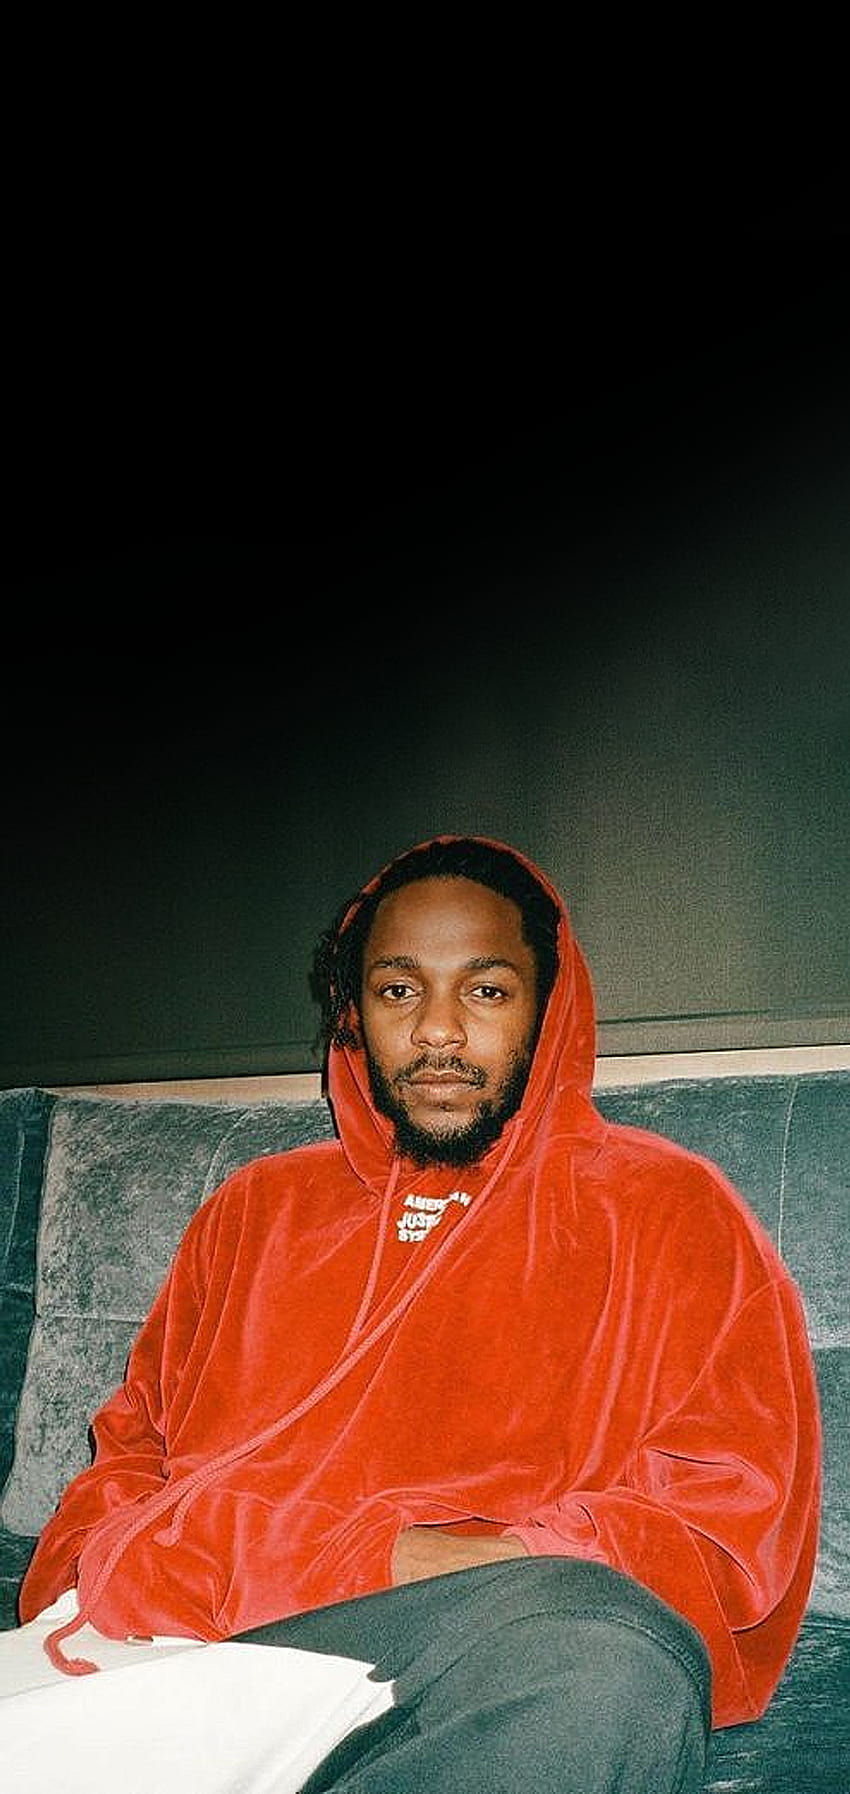 Kendrick Lamar Wallpapers - Top 25 Best Kendrick Lamar Backgrounds Download